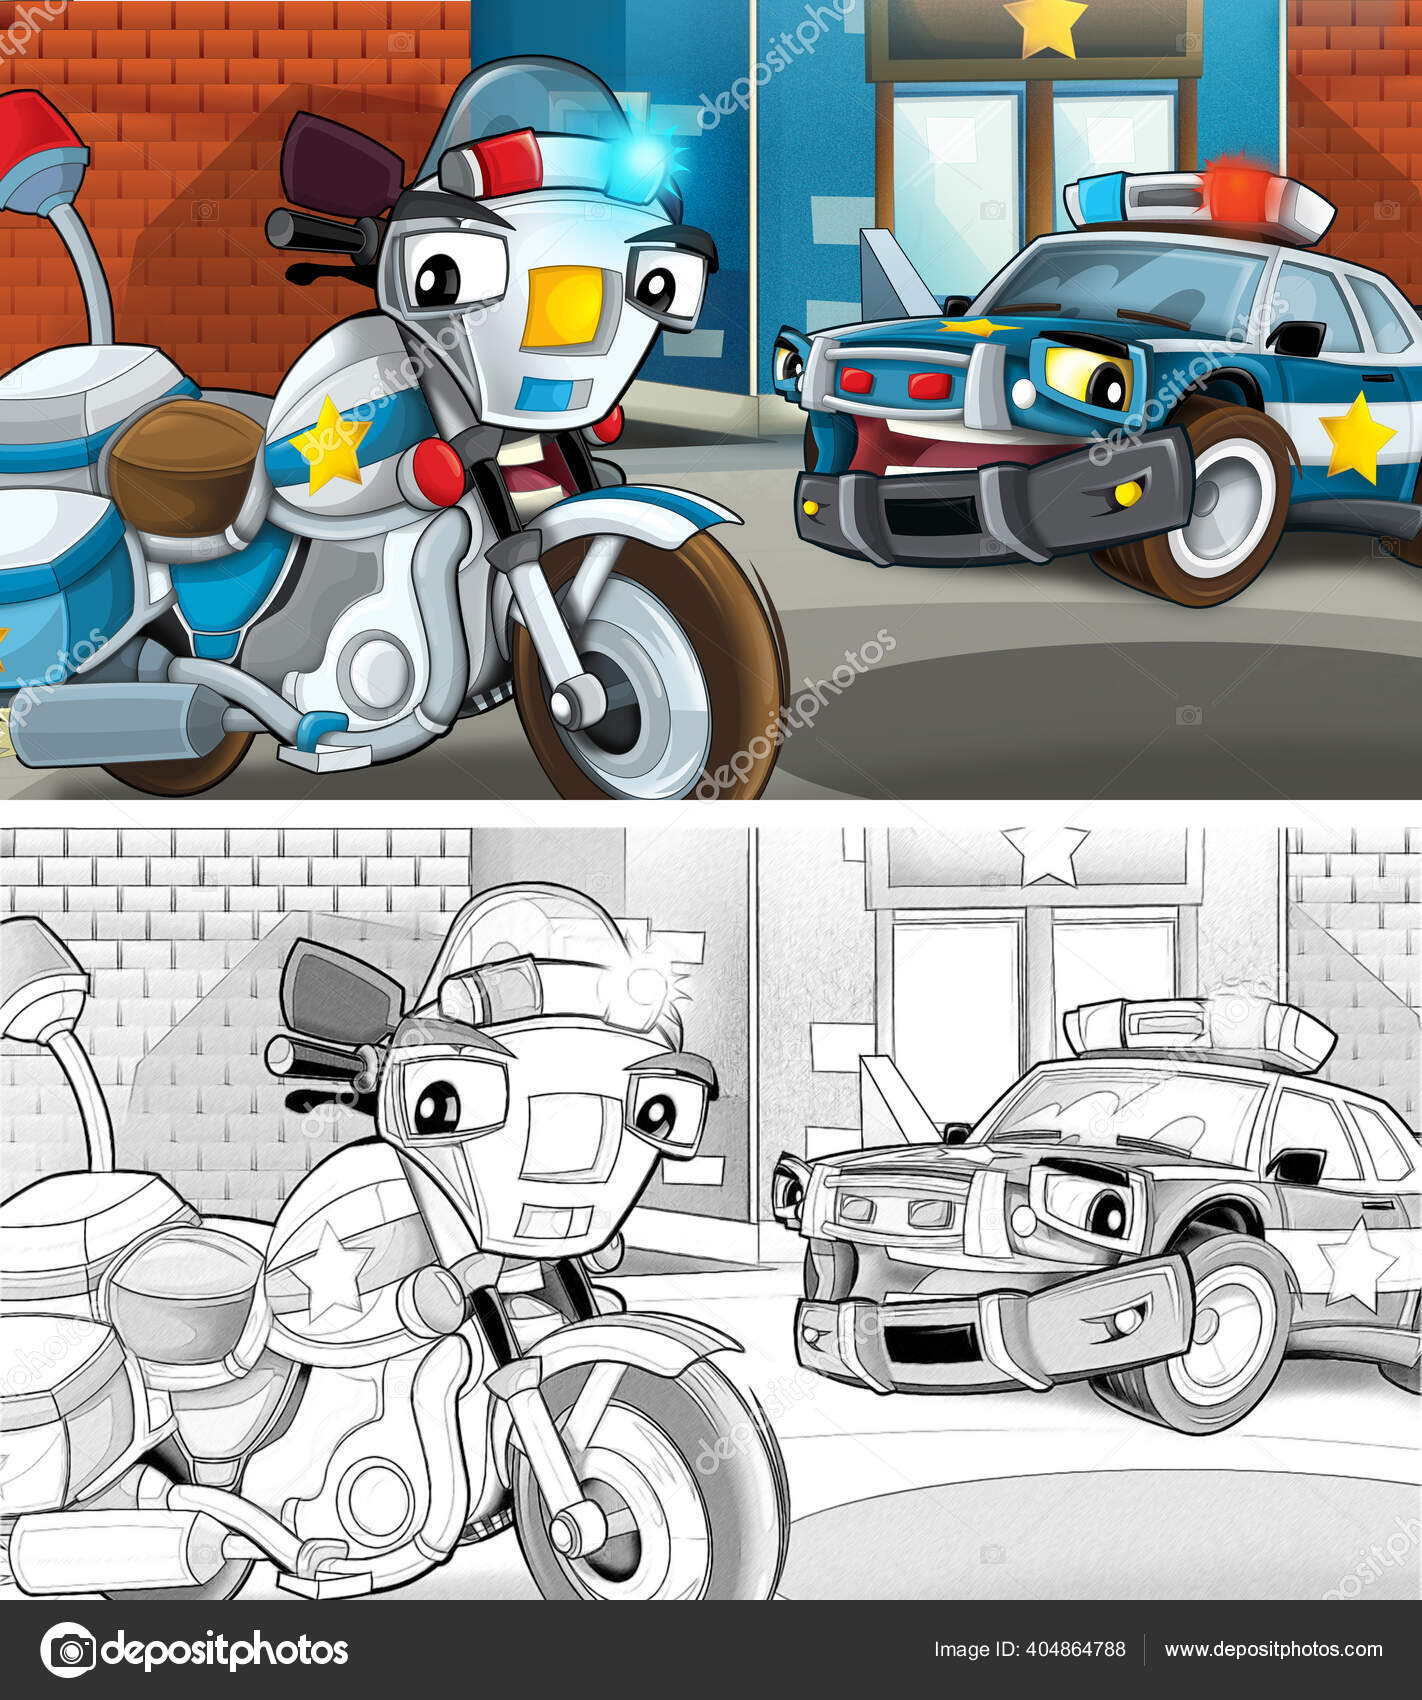 Cartoon Sketch Scene Police Officers Talking Car Motorcycle Illustration  Children Stock Photo by ©illustrator_hft 404864788